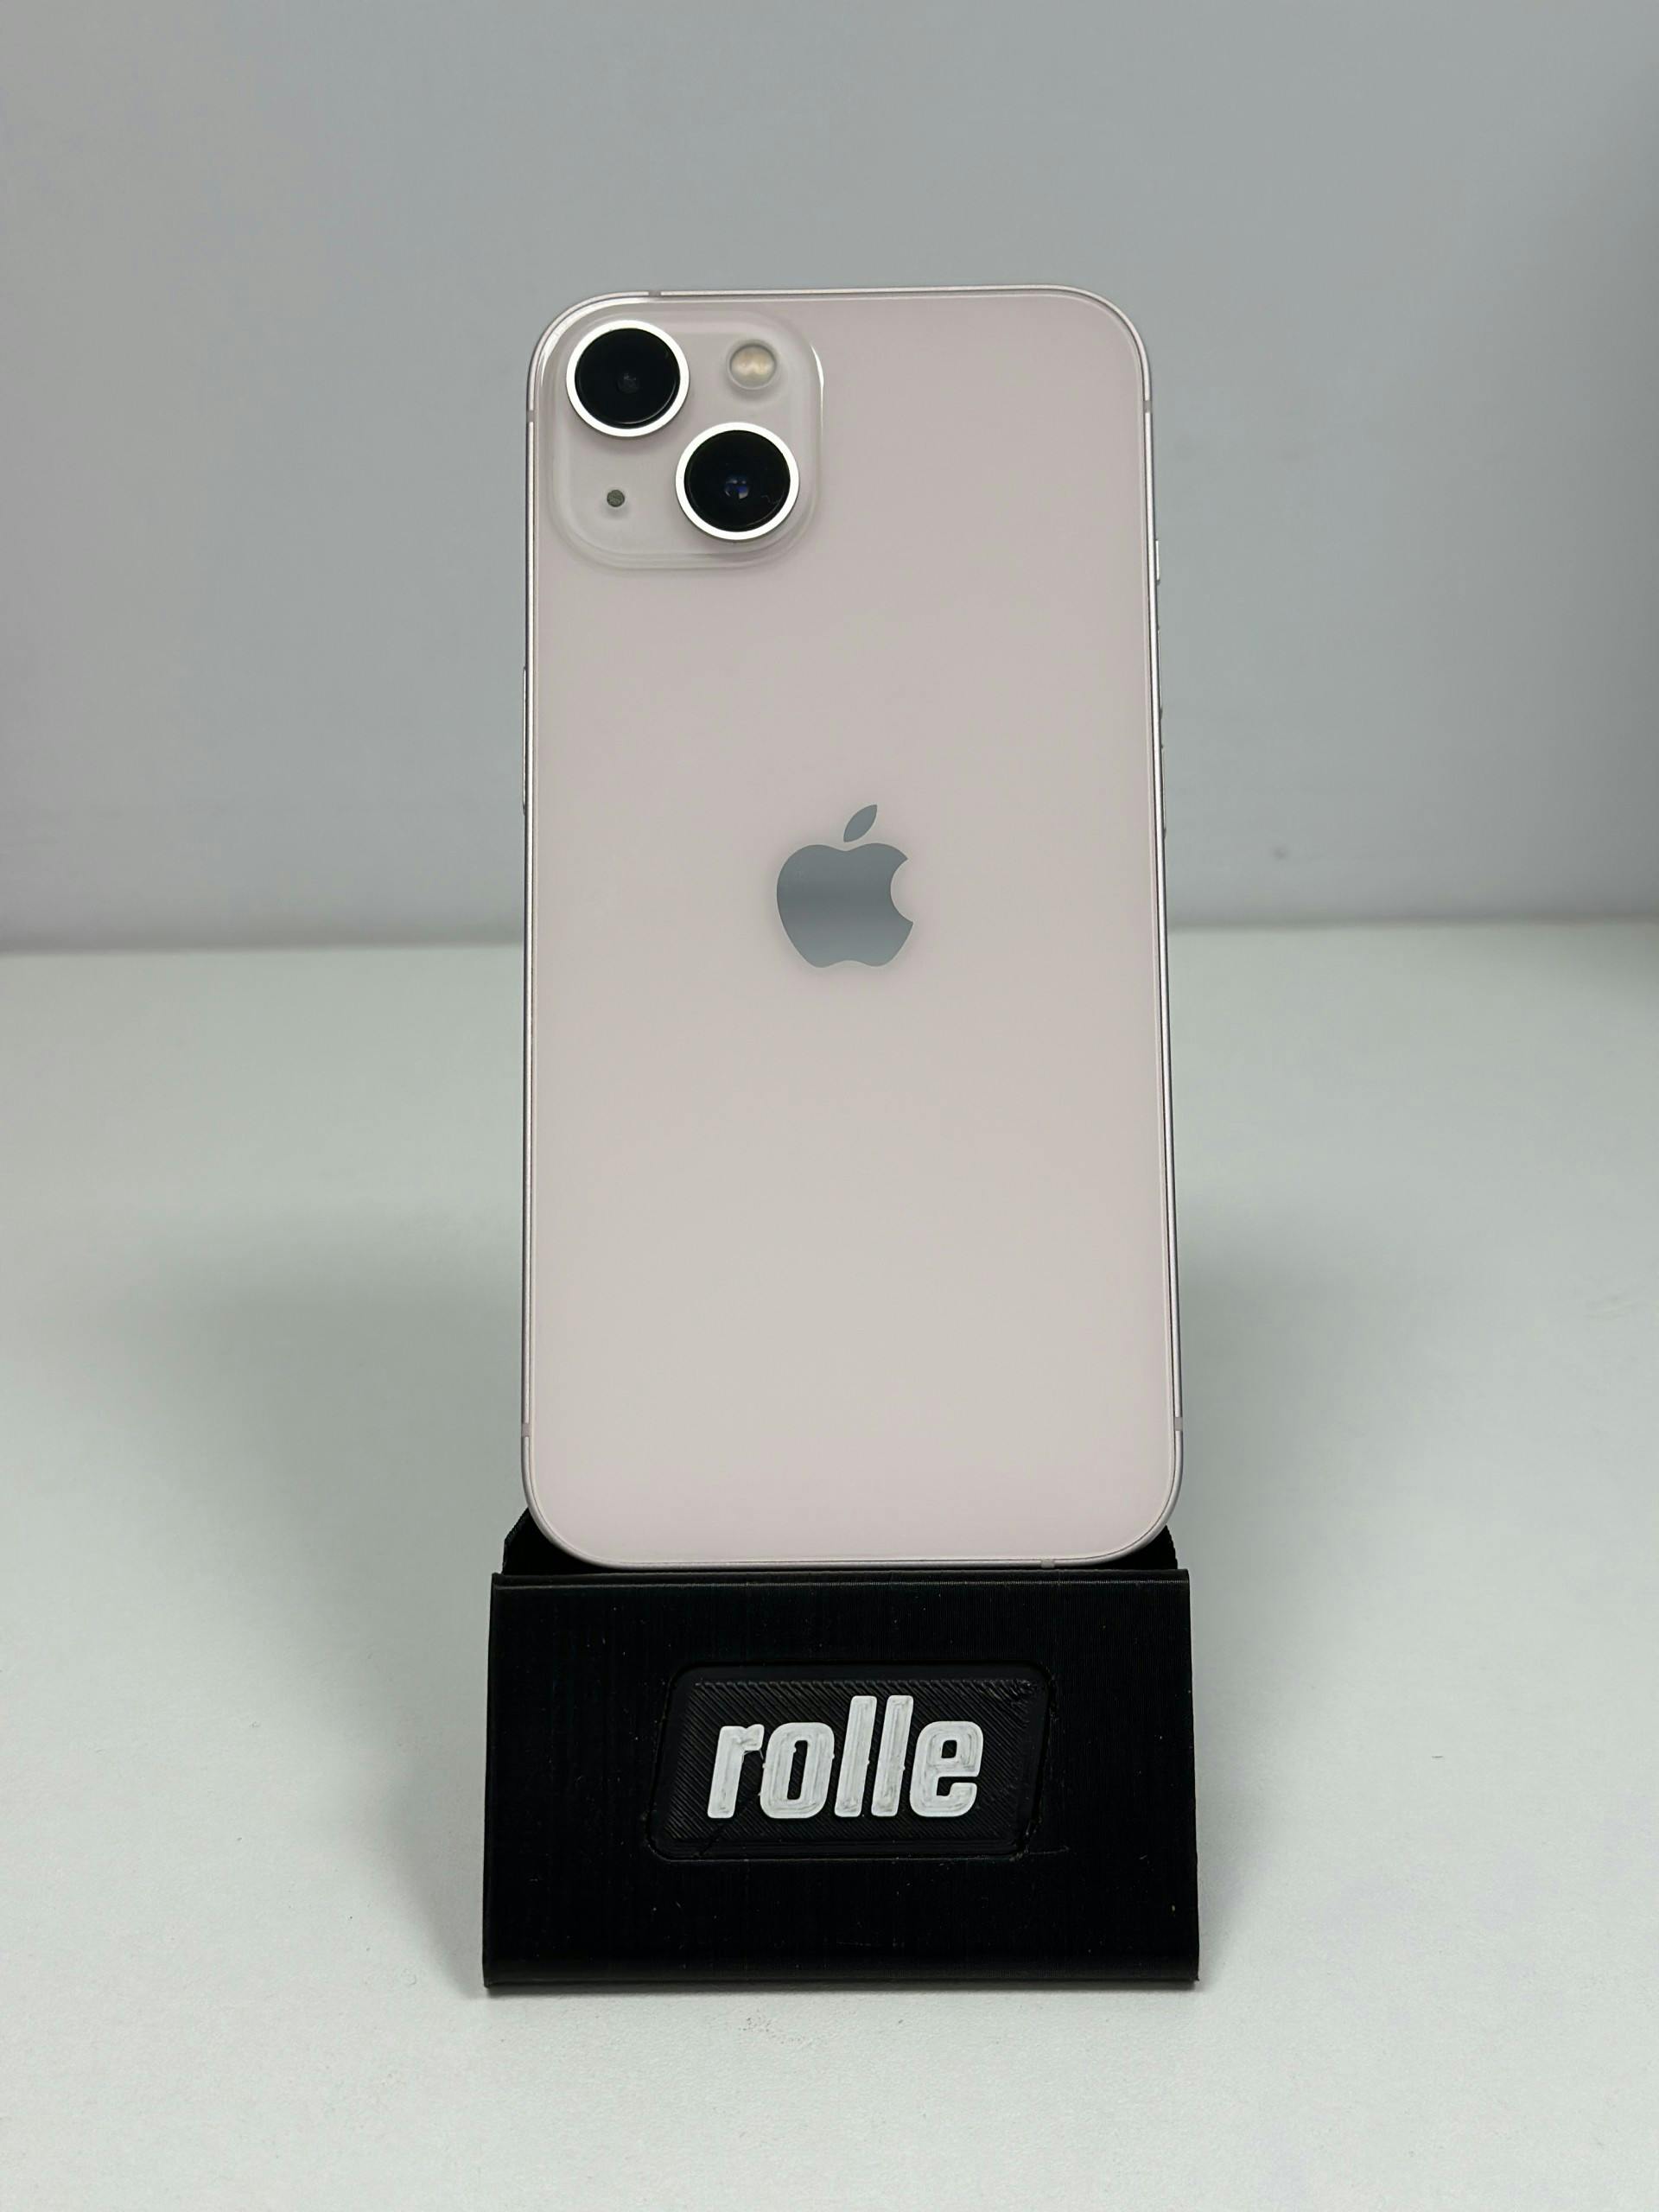 Apple iPhone 13 128GB Pink